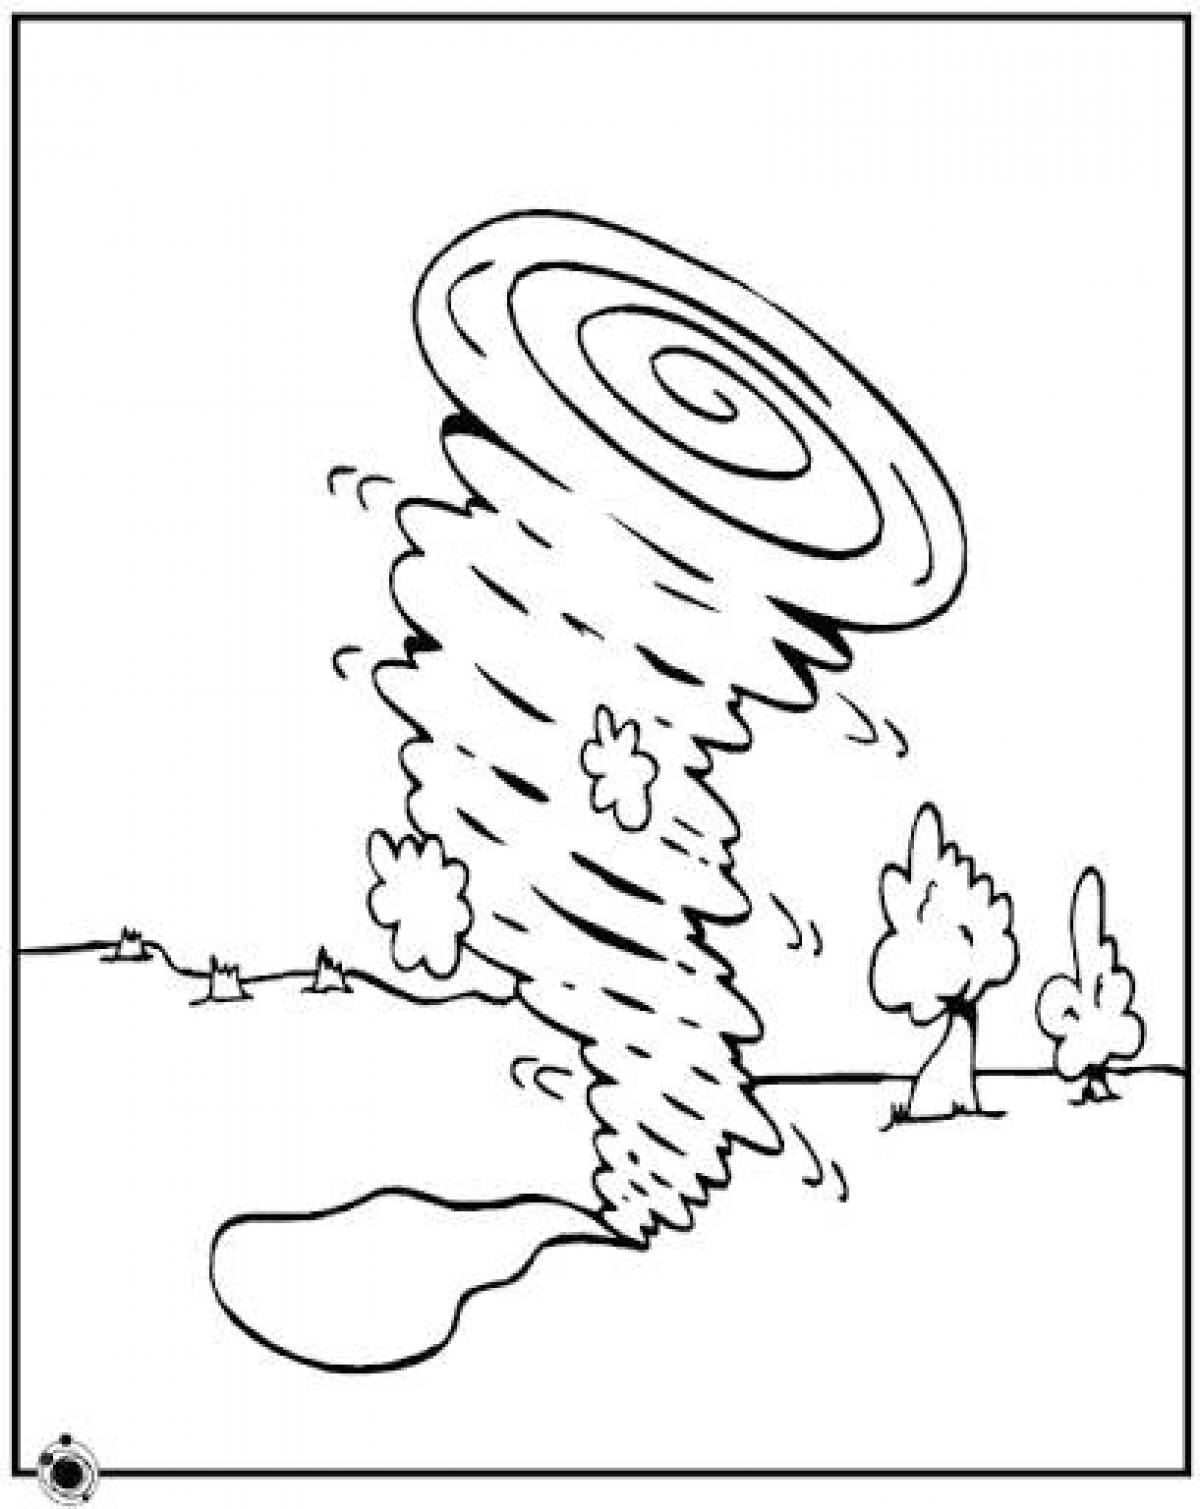 Tornado drawing